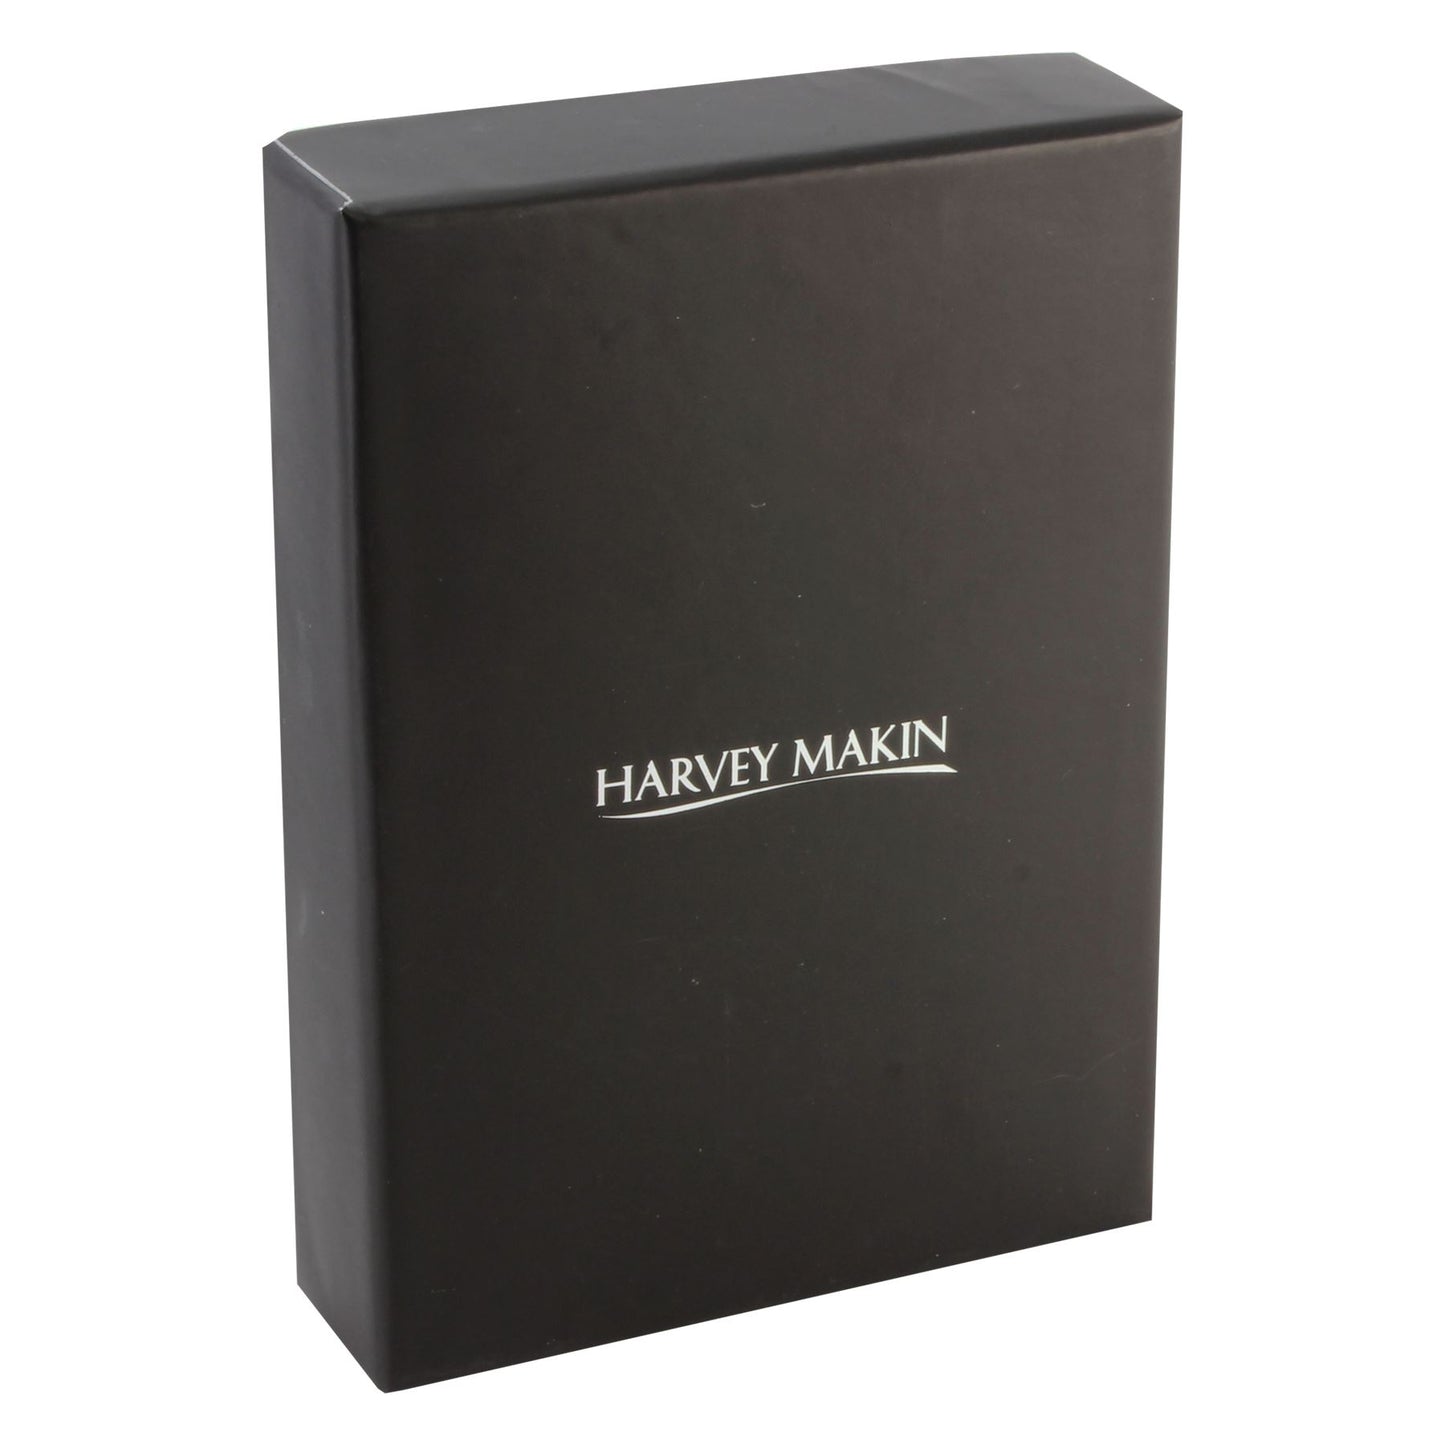 Harvey Makin Rhodium Plated Cufflinks Silver/Gold Cars